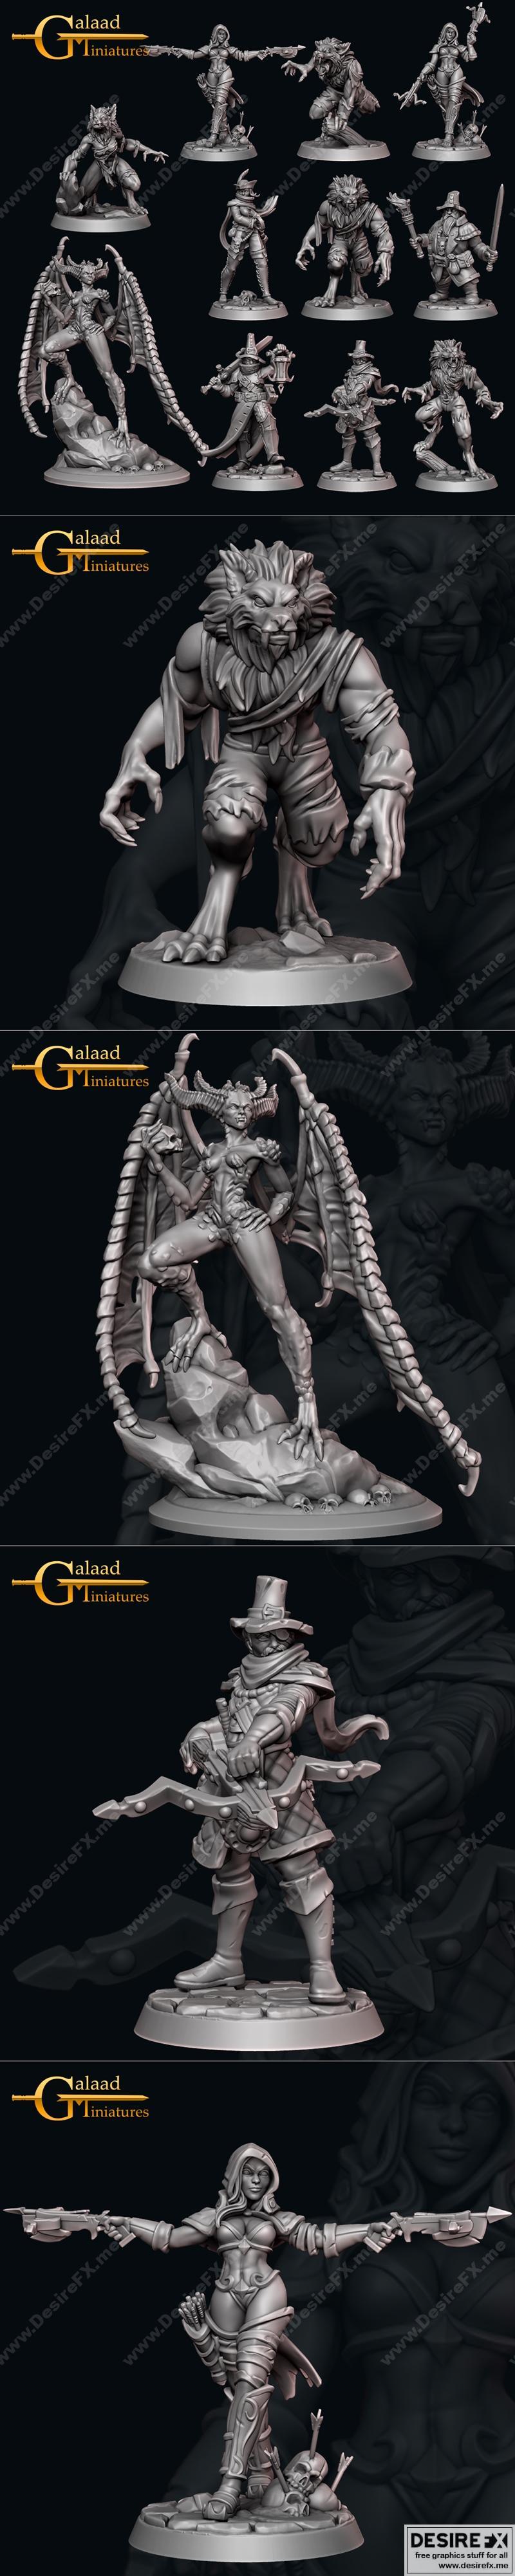 Desire FX 3d models | Galaad Miniatures – Hunters and Werewolf October ...